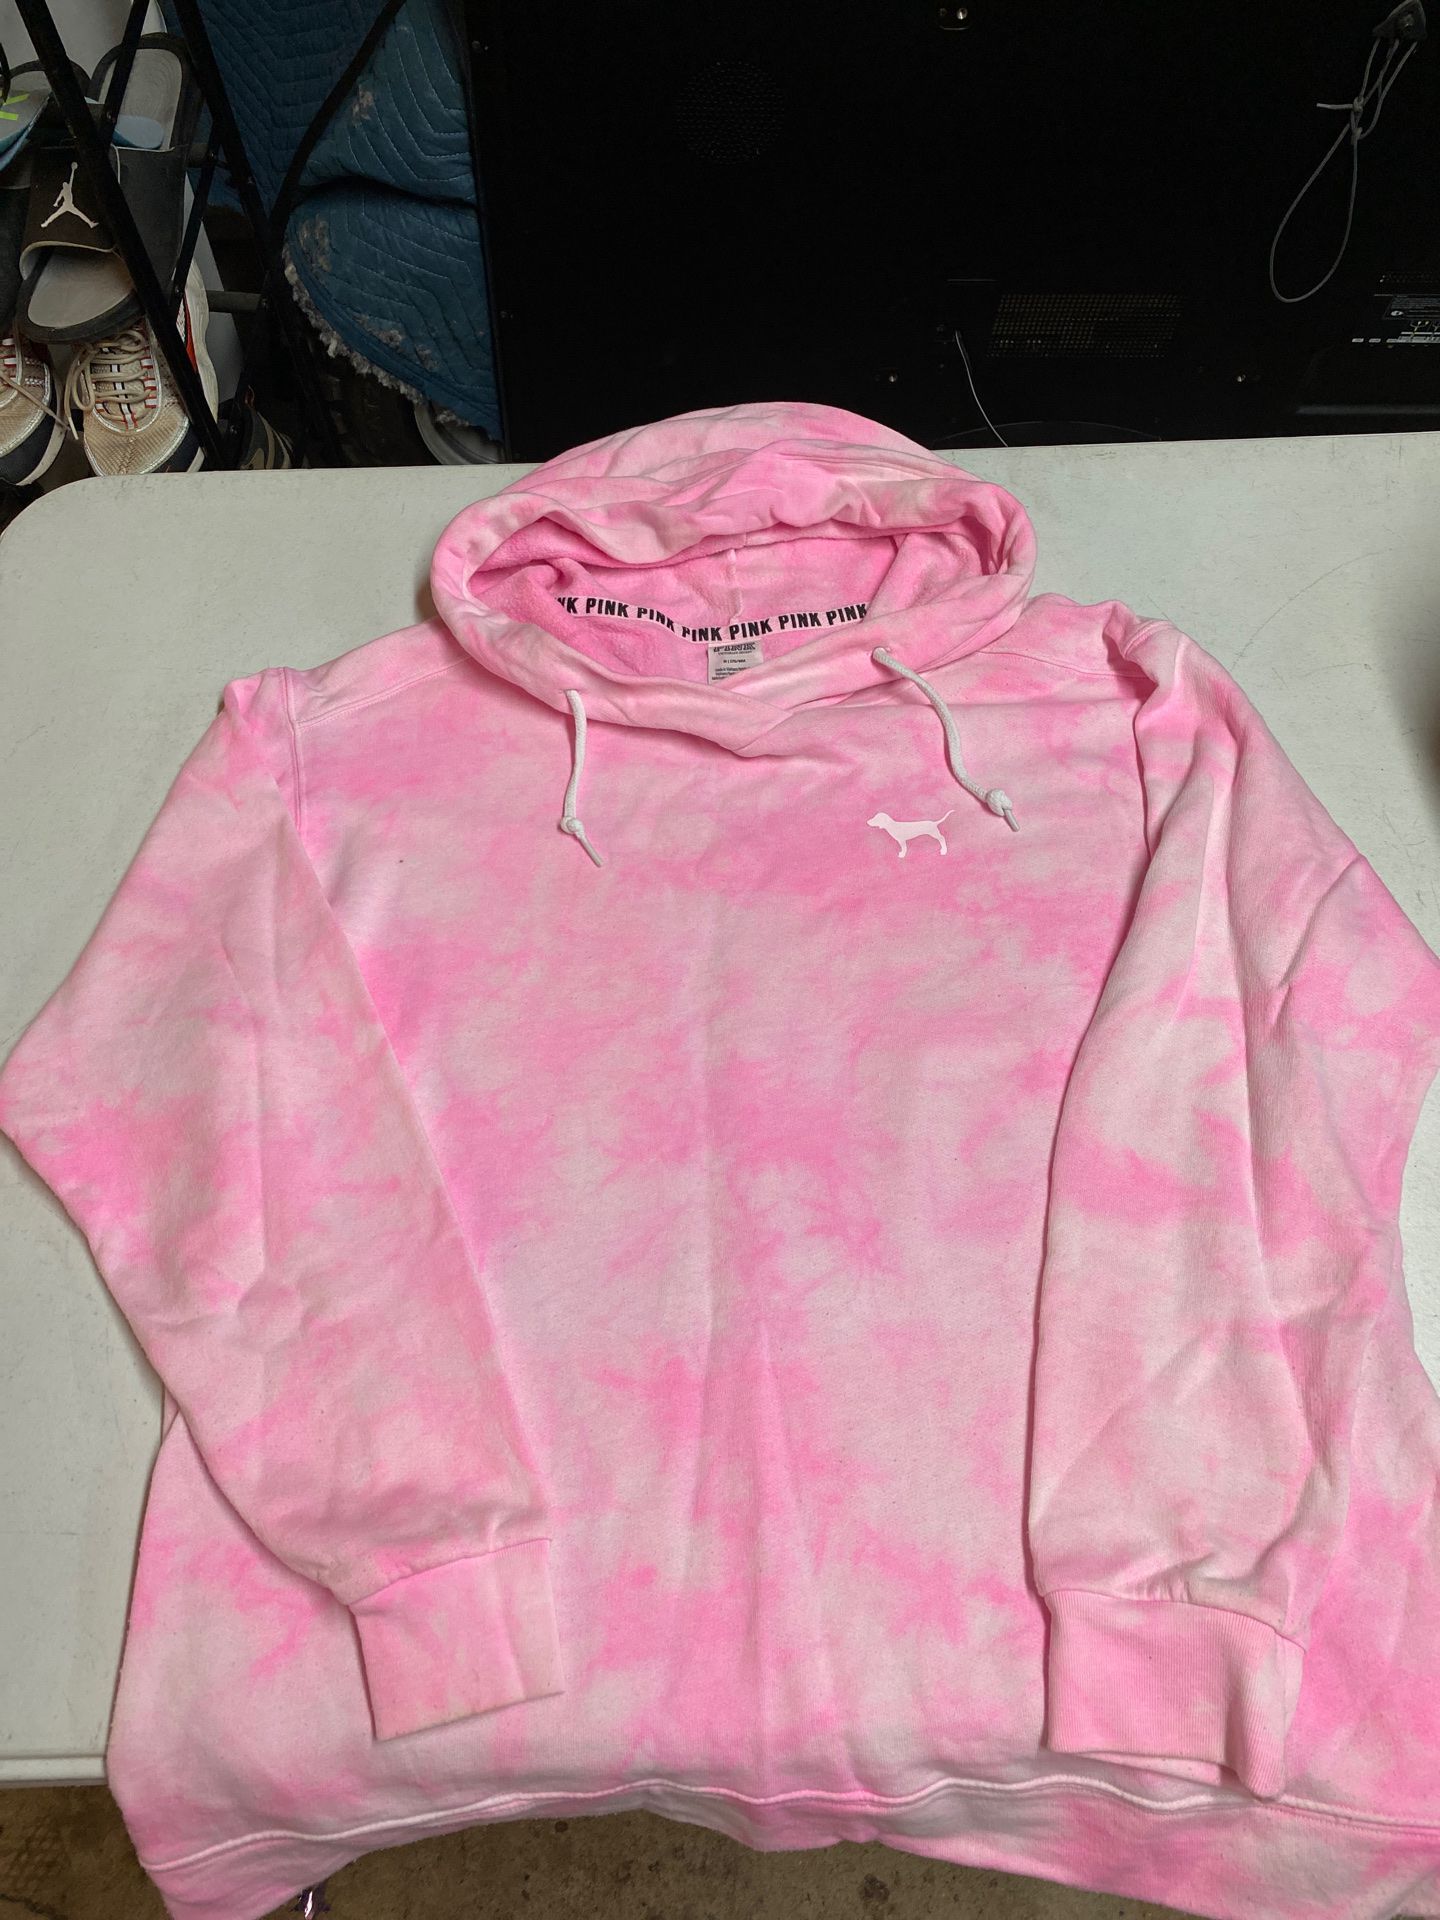 Victoria secret pink tie die hoodie size medium